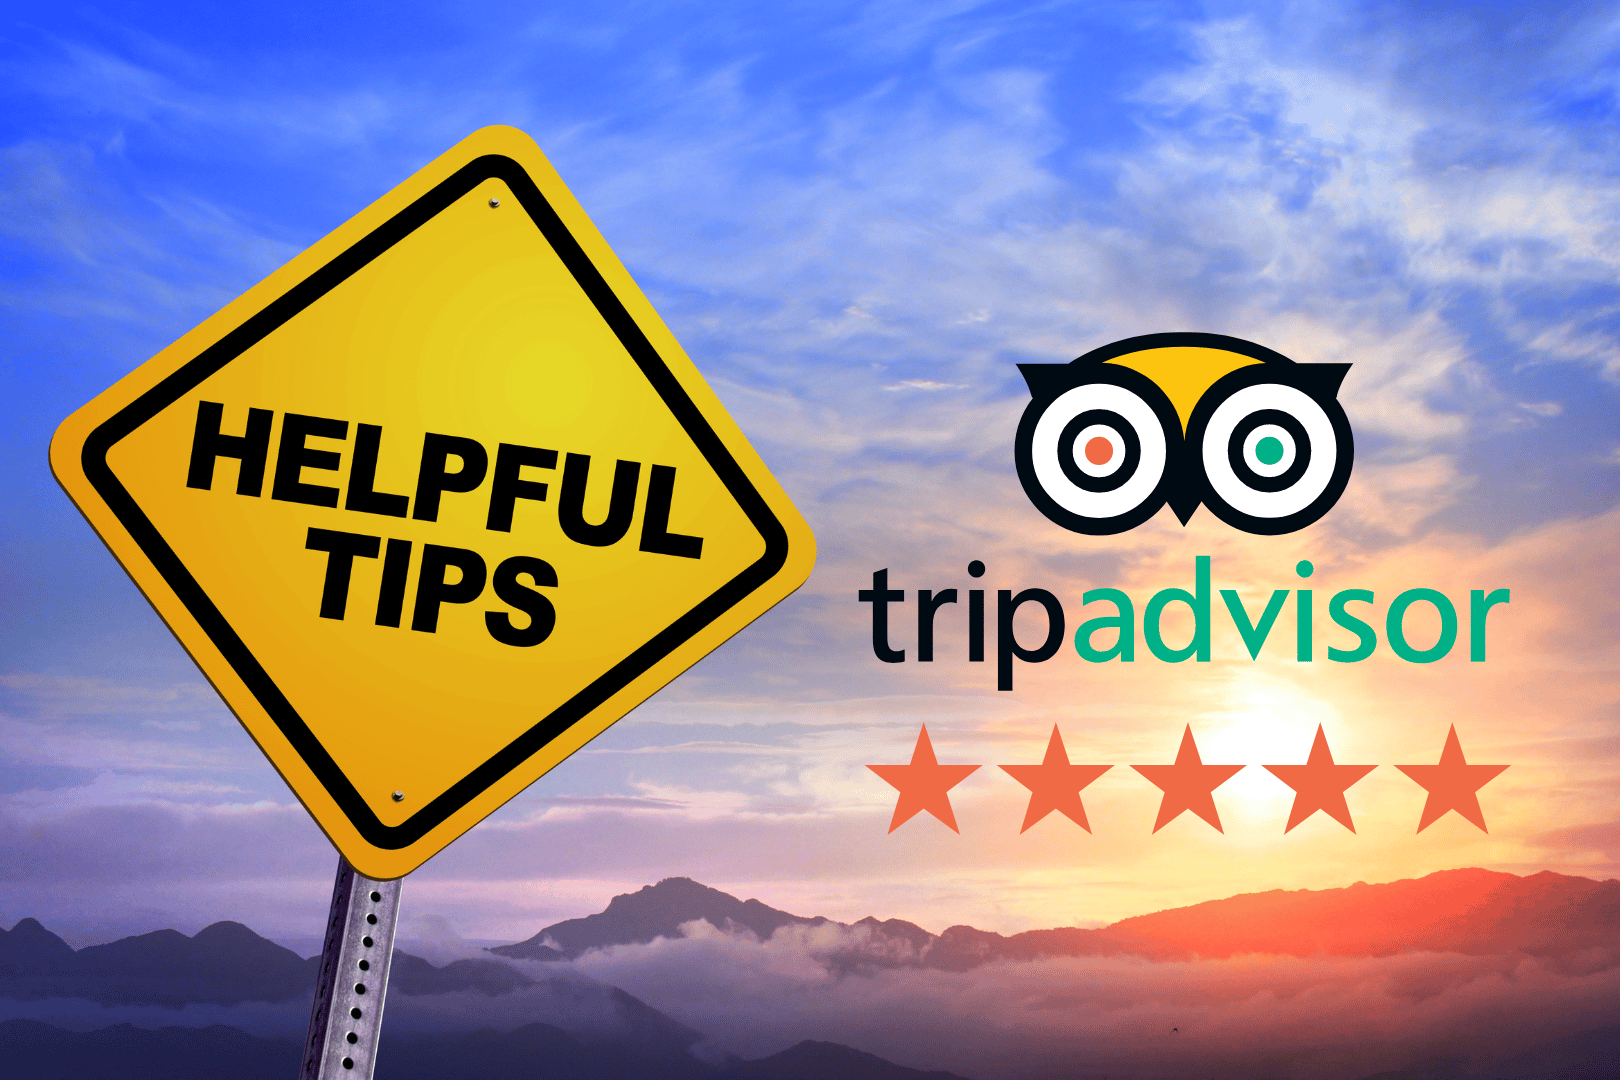 trip advisor logo and helpful tips sign